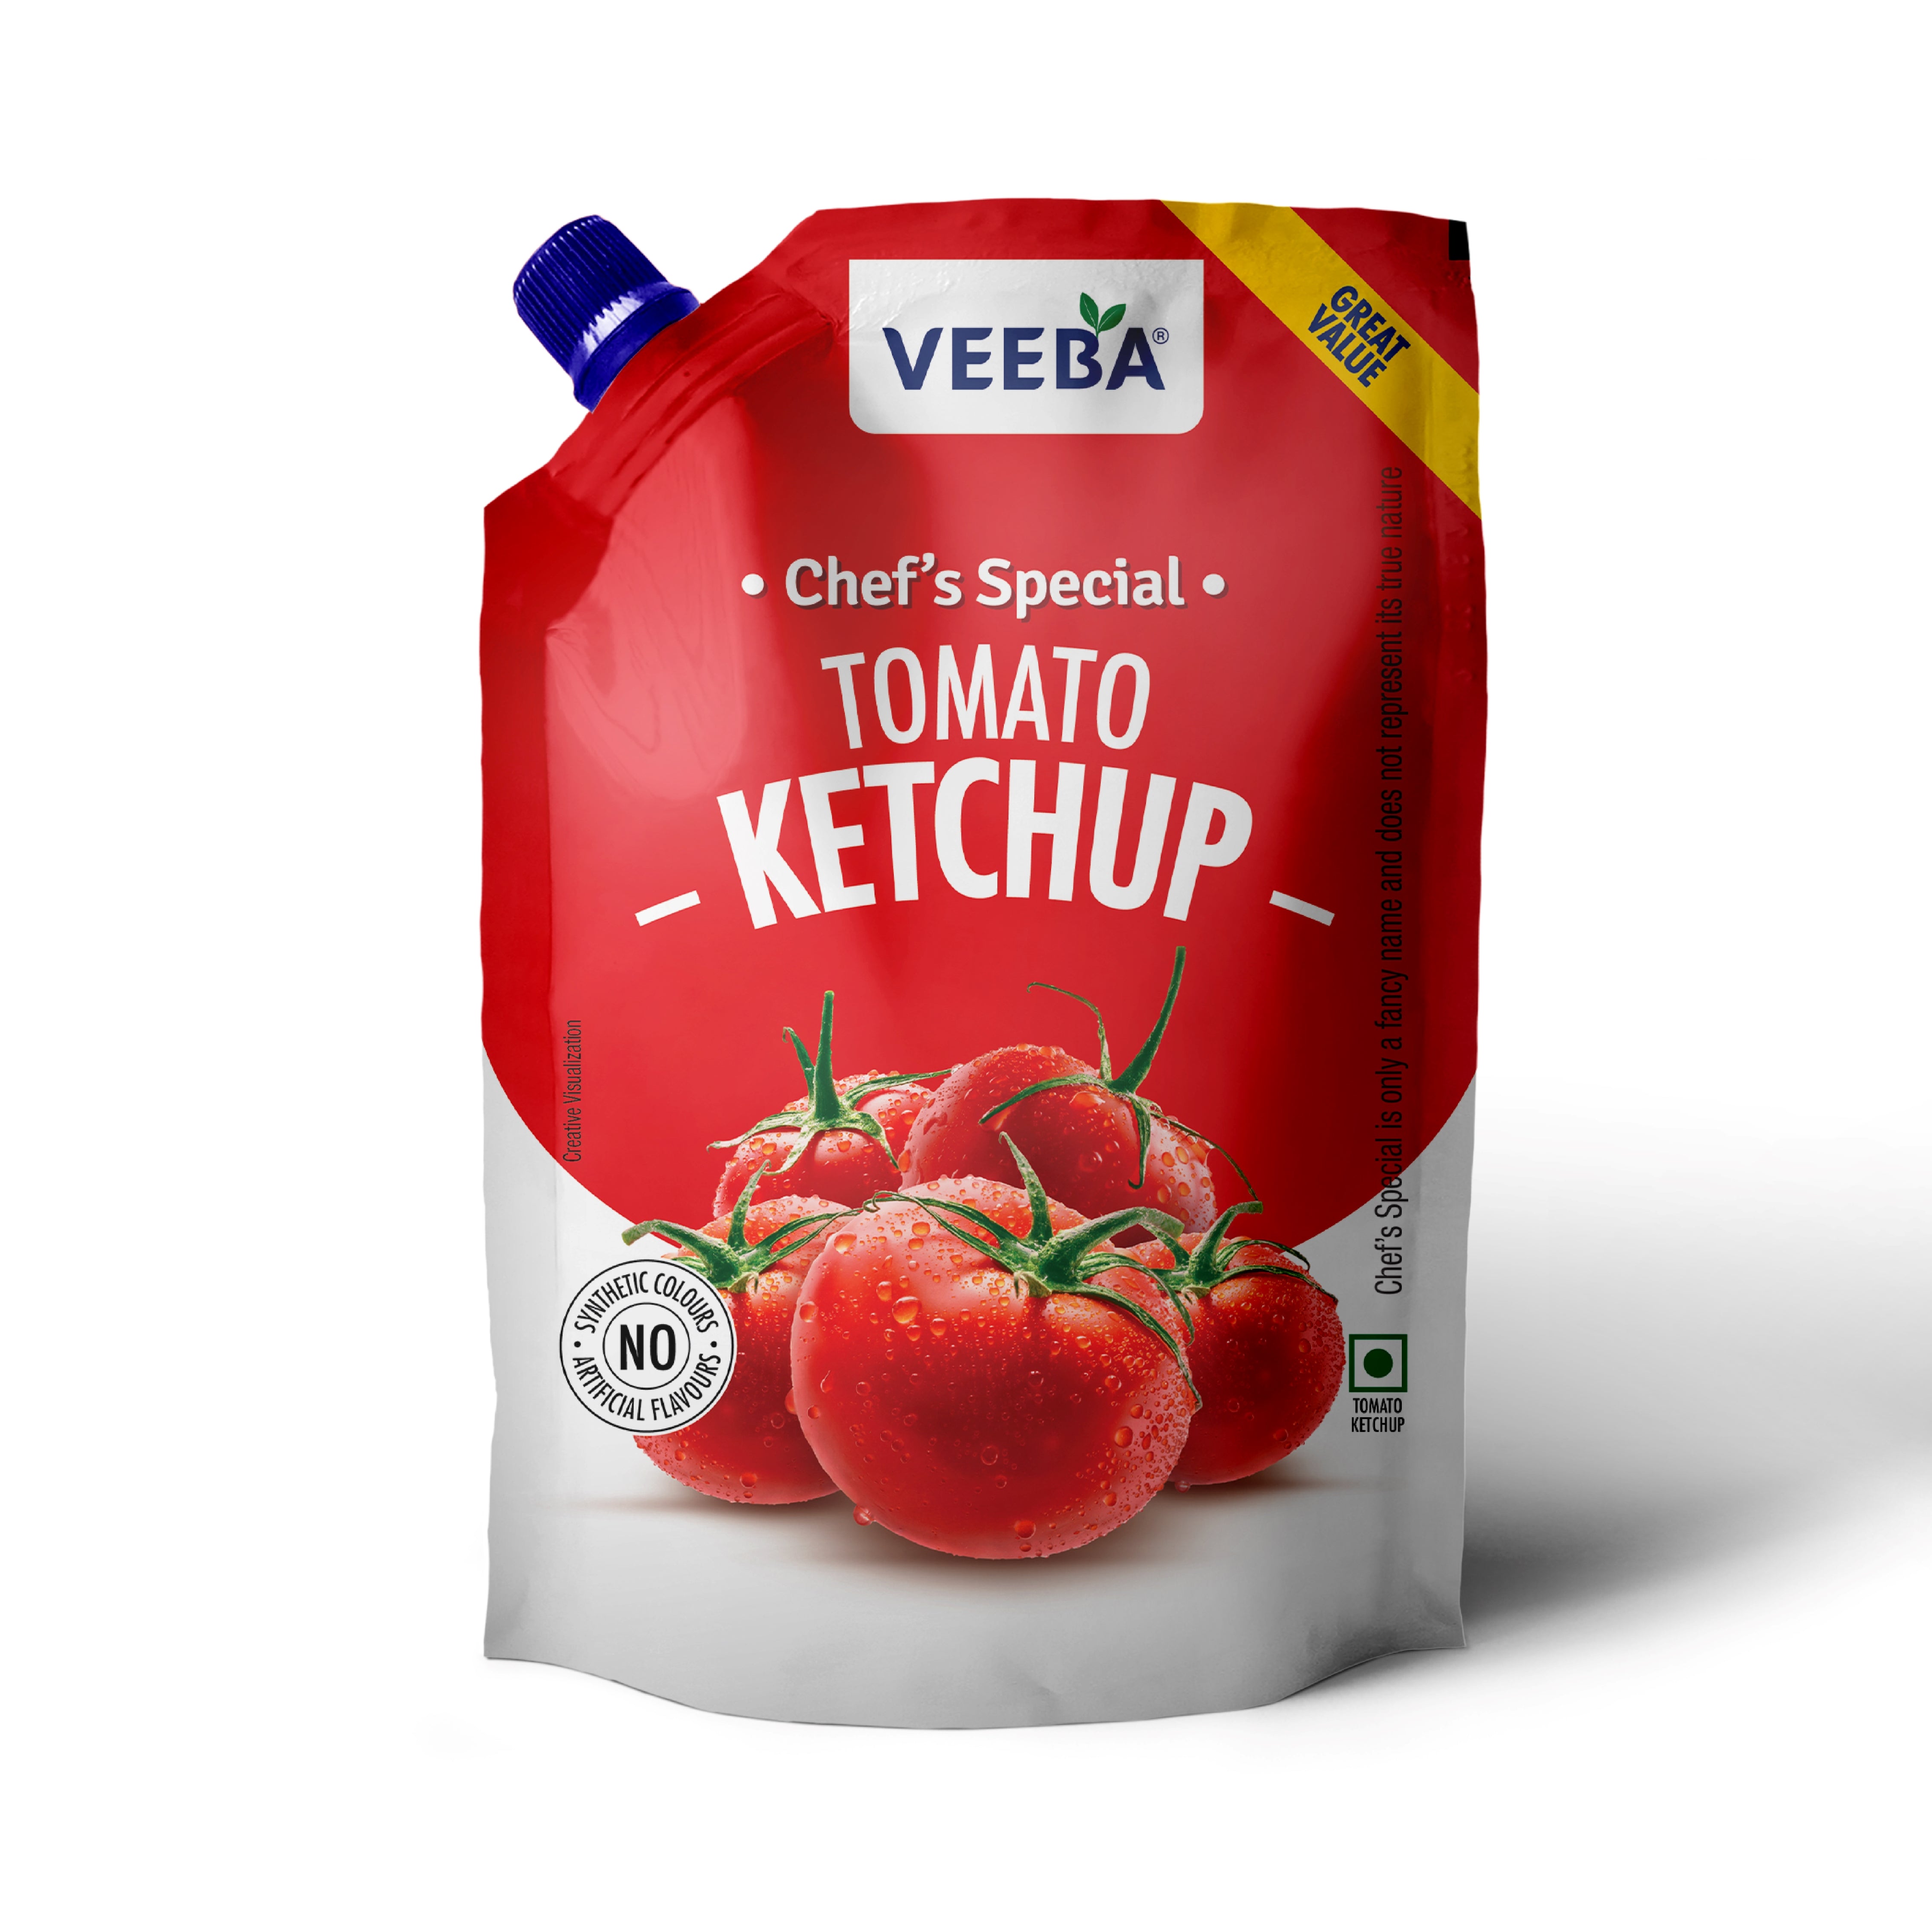 Veeba Chef’s Special Tomato Ketchup (900G)